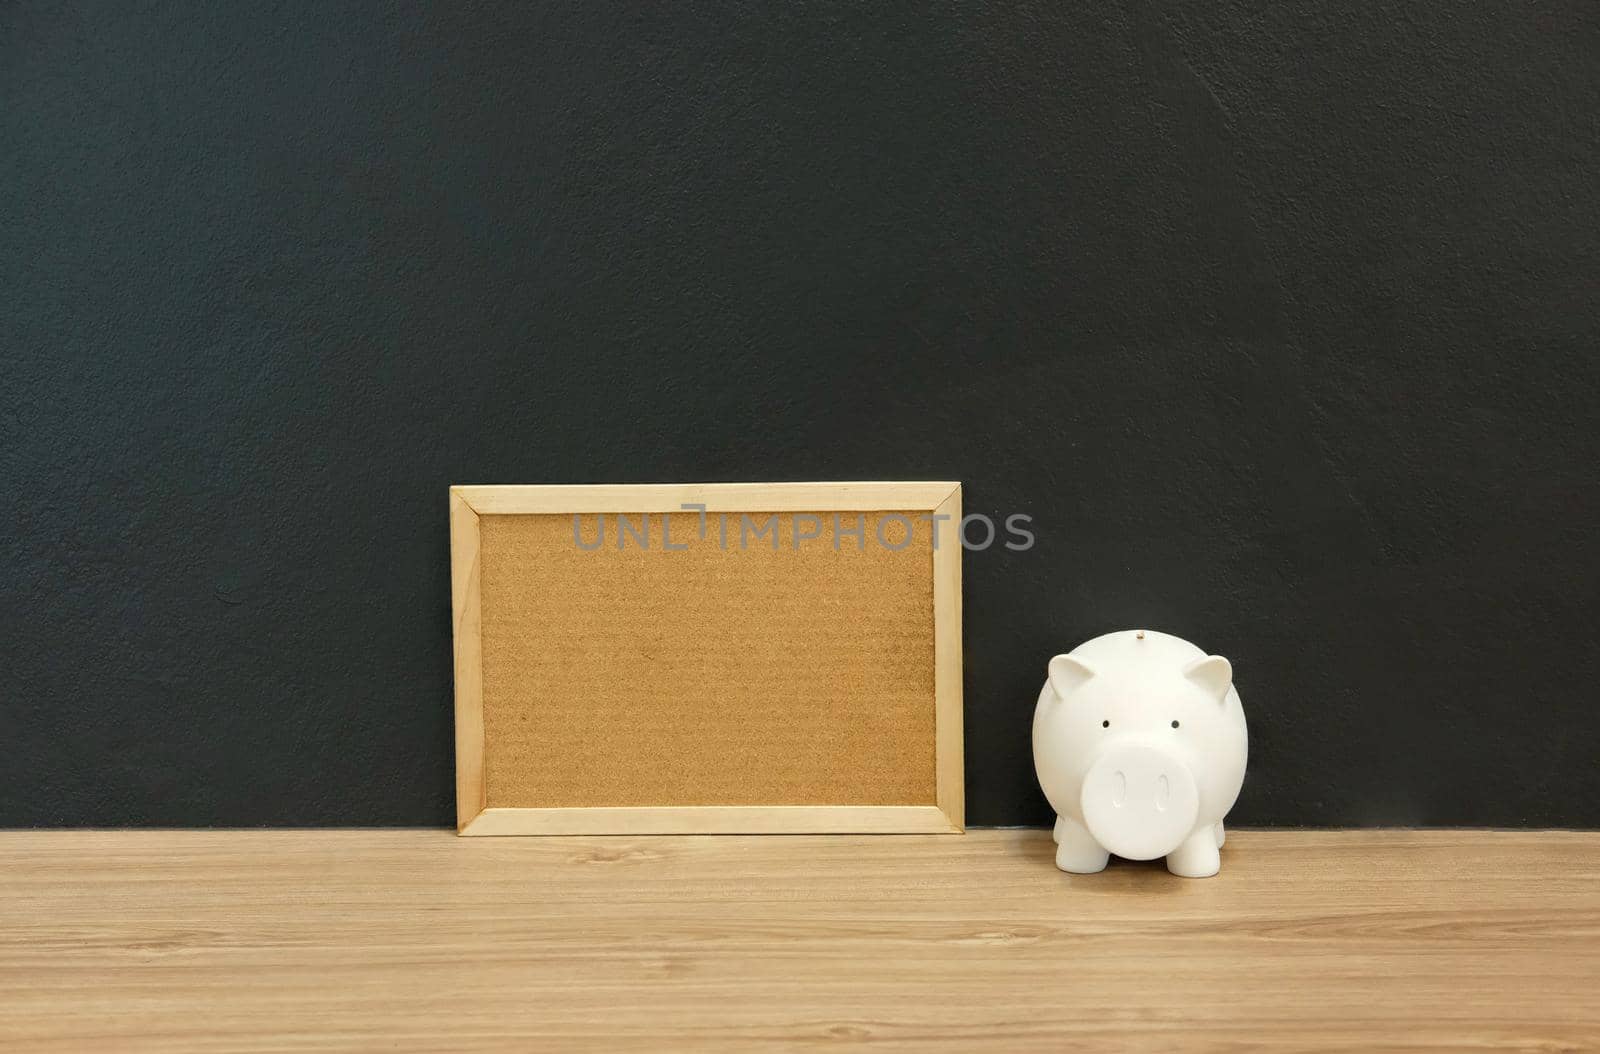 cork board piggy bank. money saving finance investment concept by pp99